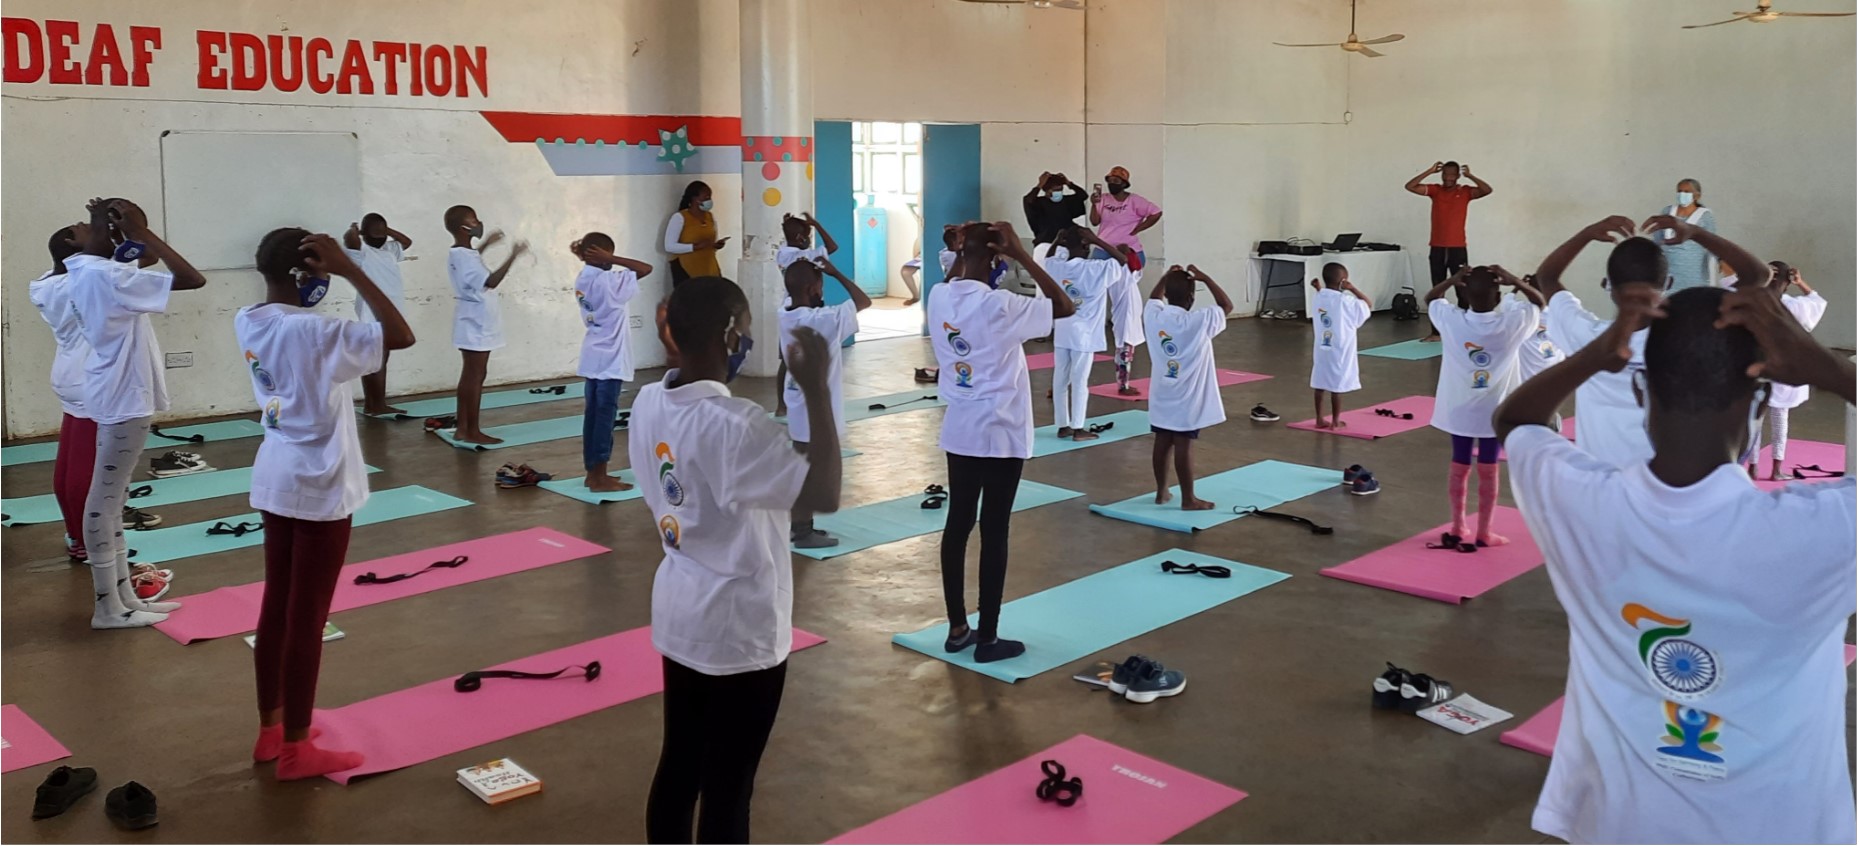 7th International Day of Yoga (Francistown)